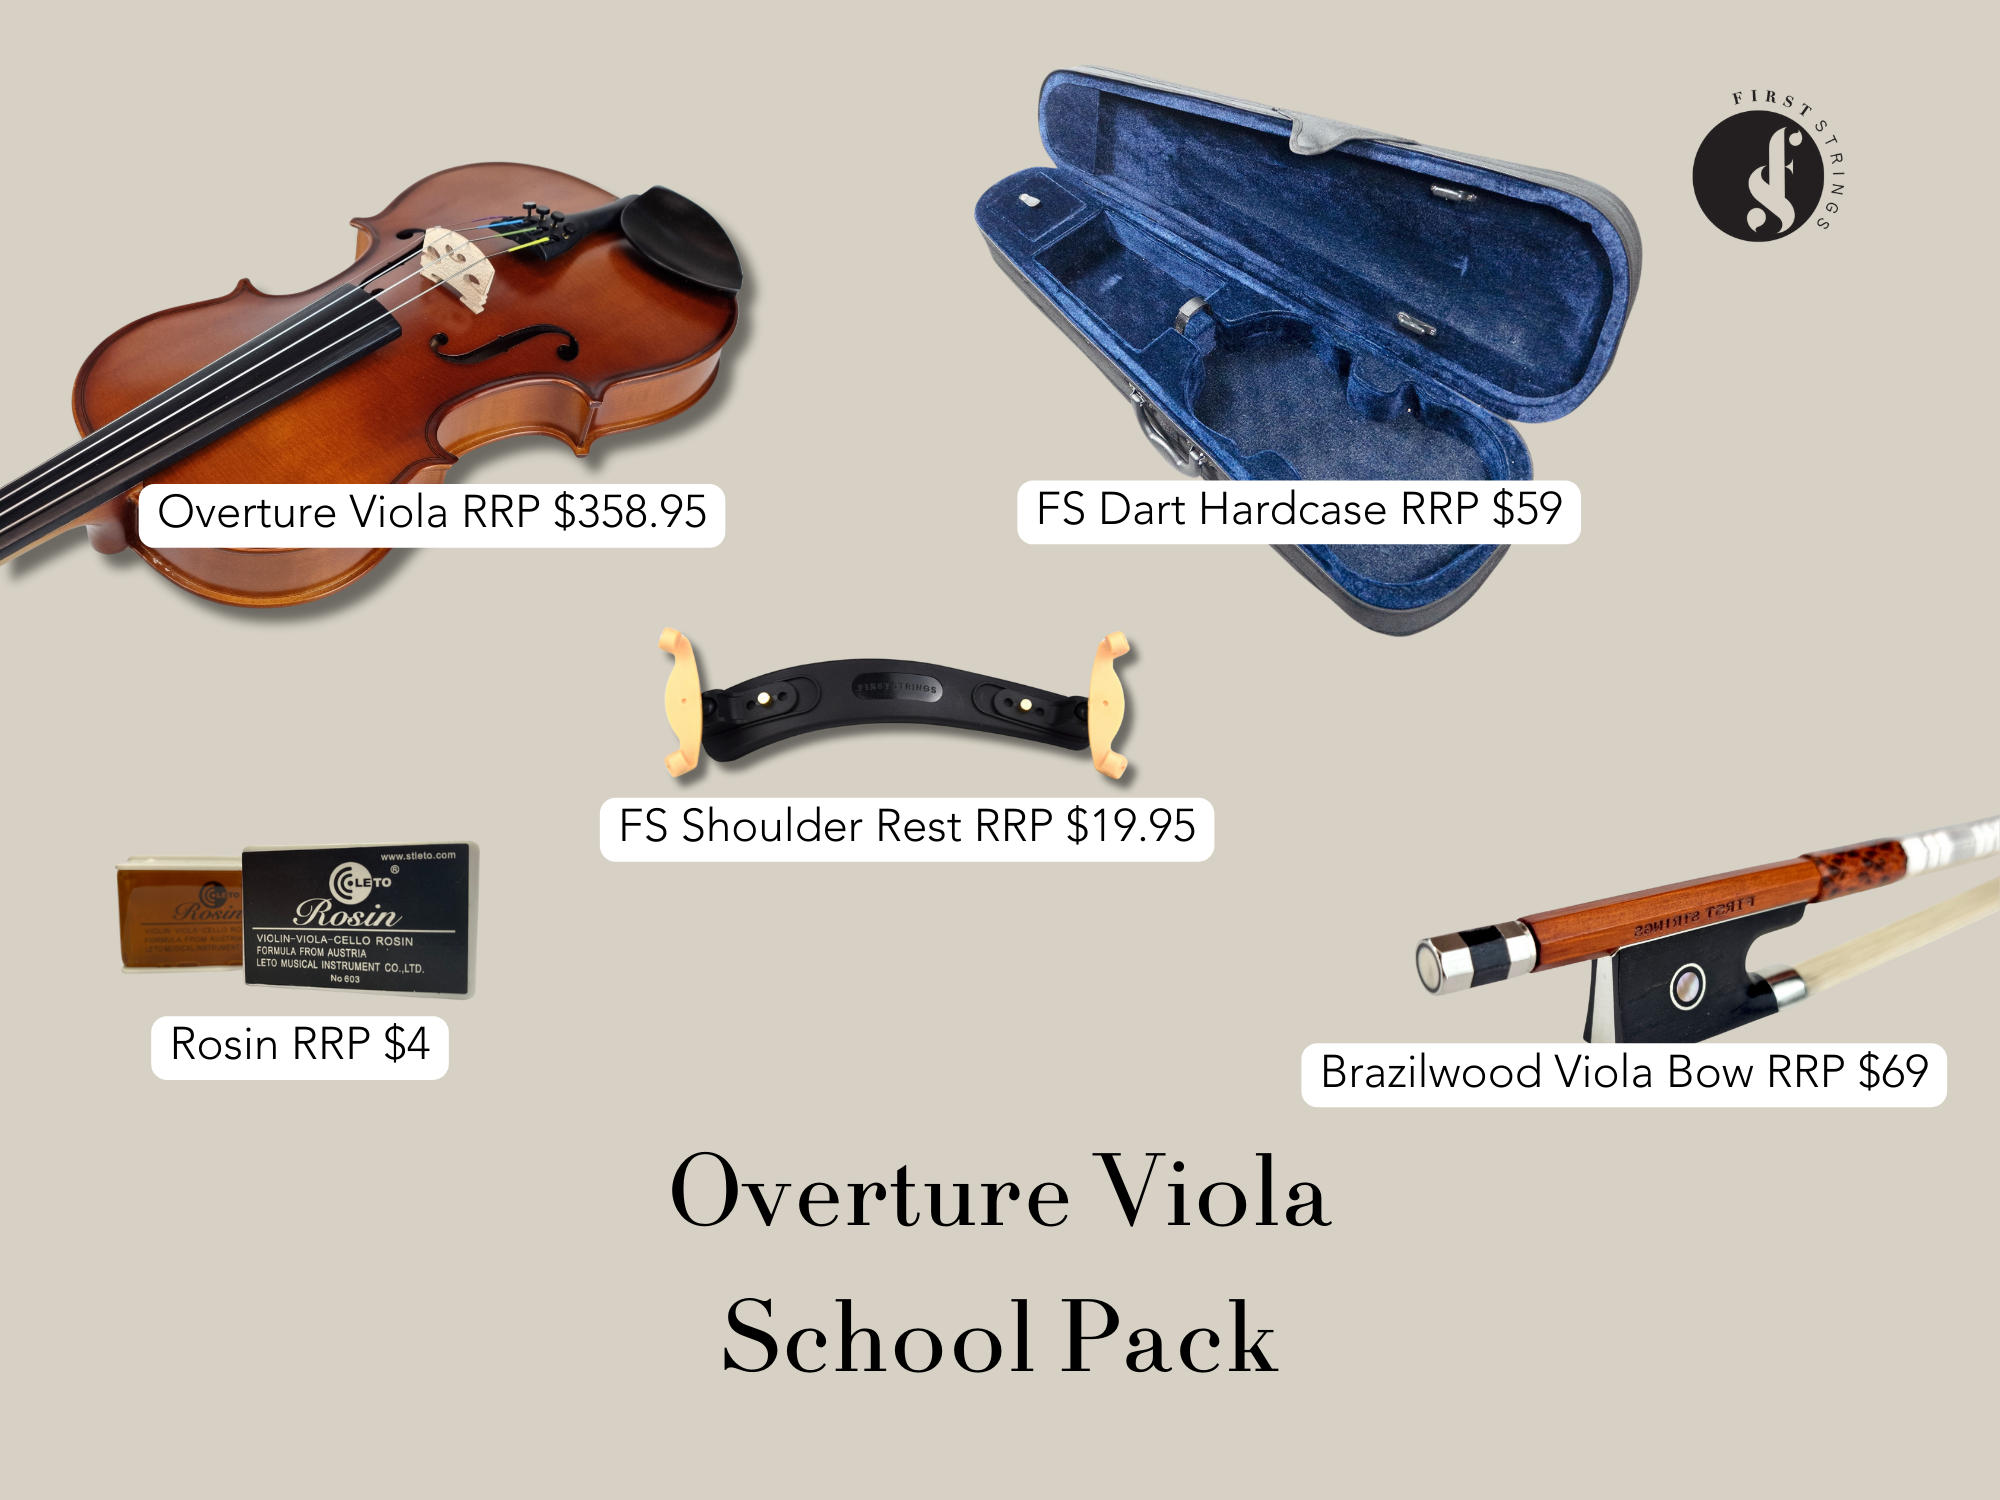 Overture Viola School Pack